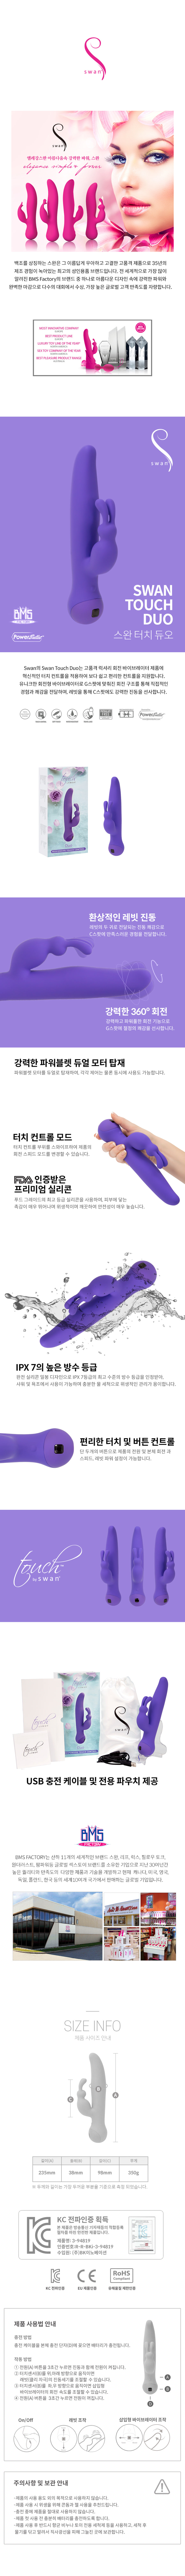 sawn_touch_duo_purple.jpg